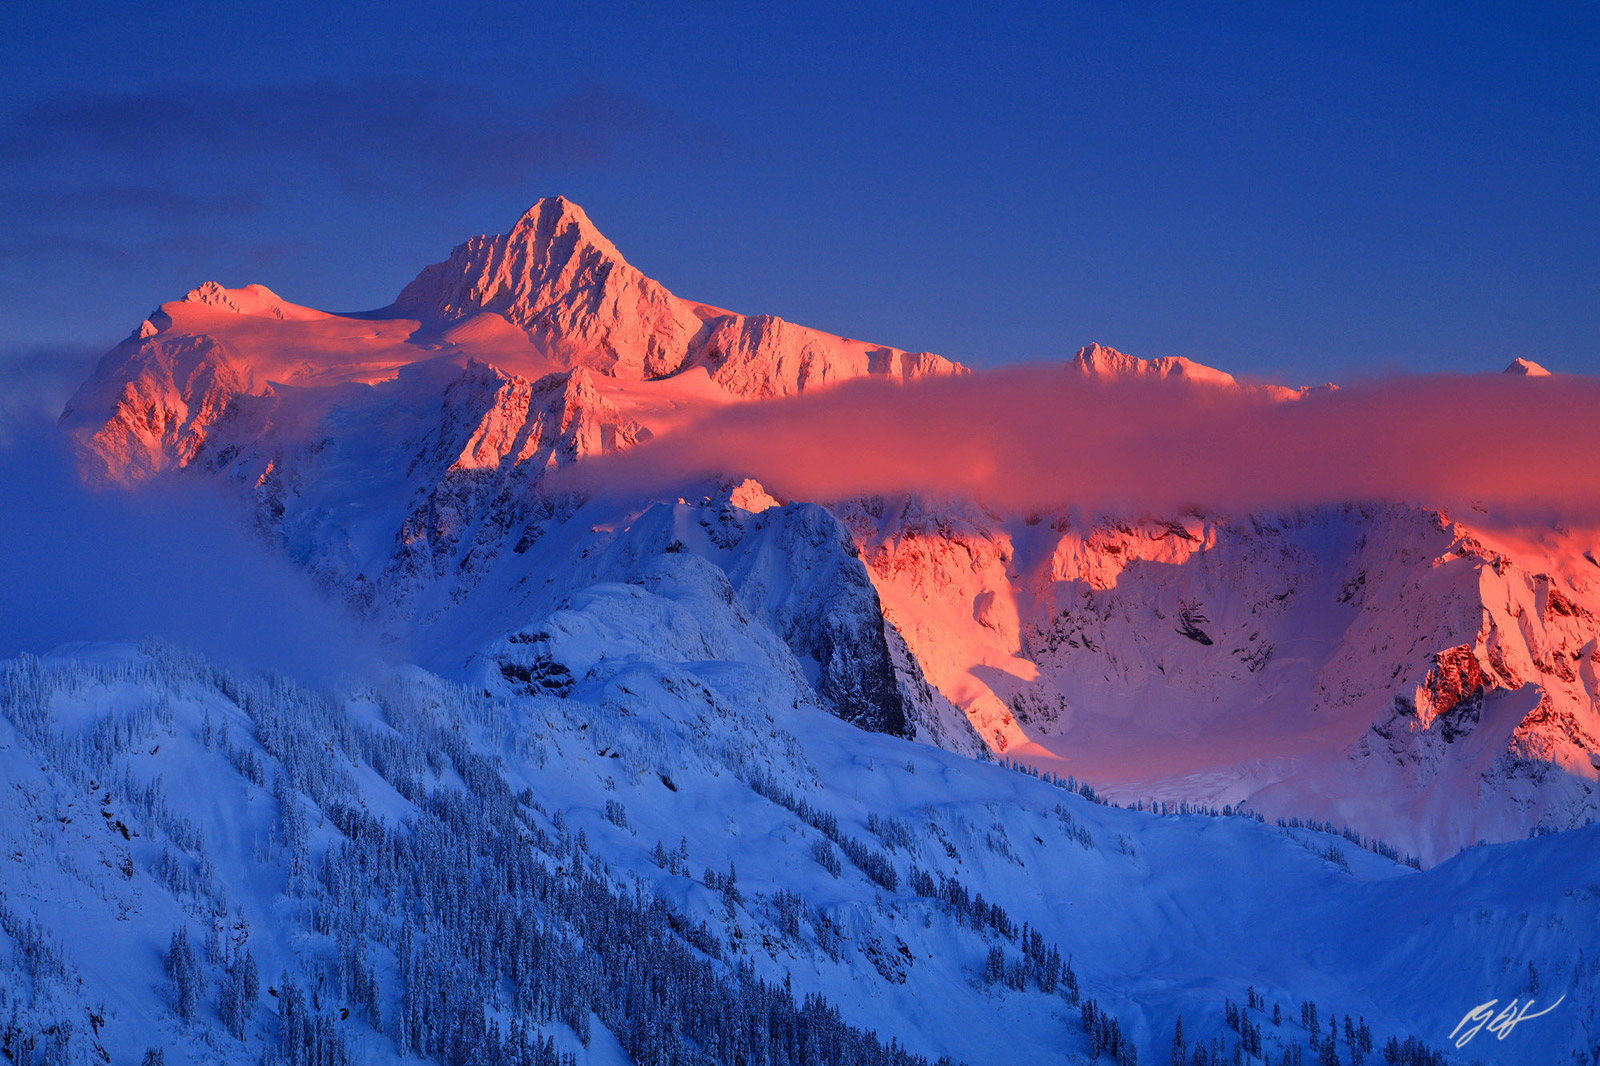 Winter Sunset on Mt Shuksan from Artist Ridge in the Mt Baker National Recreation Area in Washington